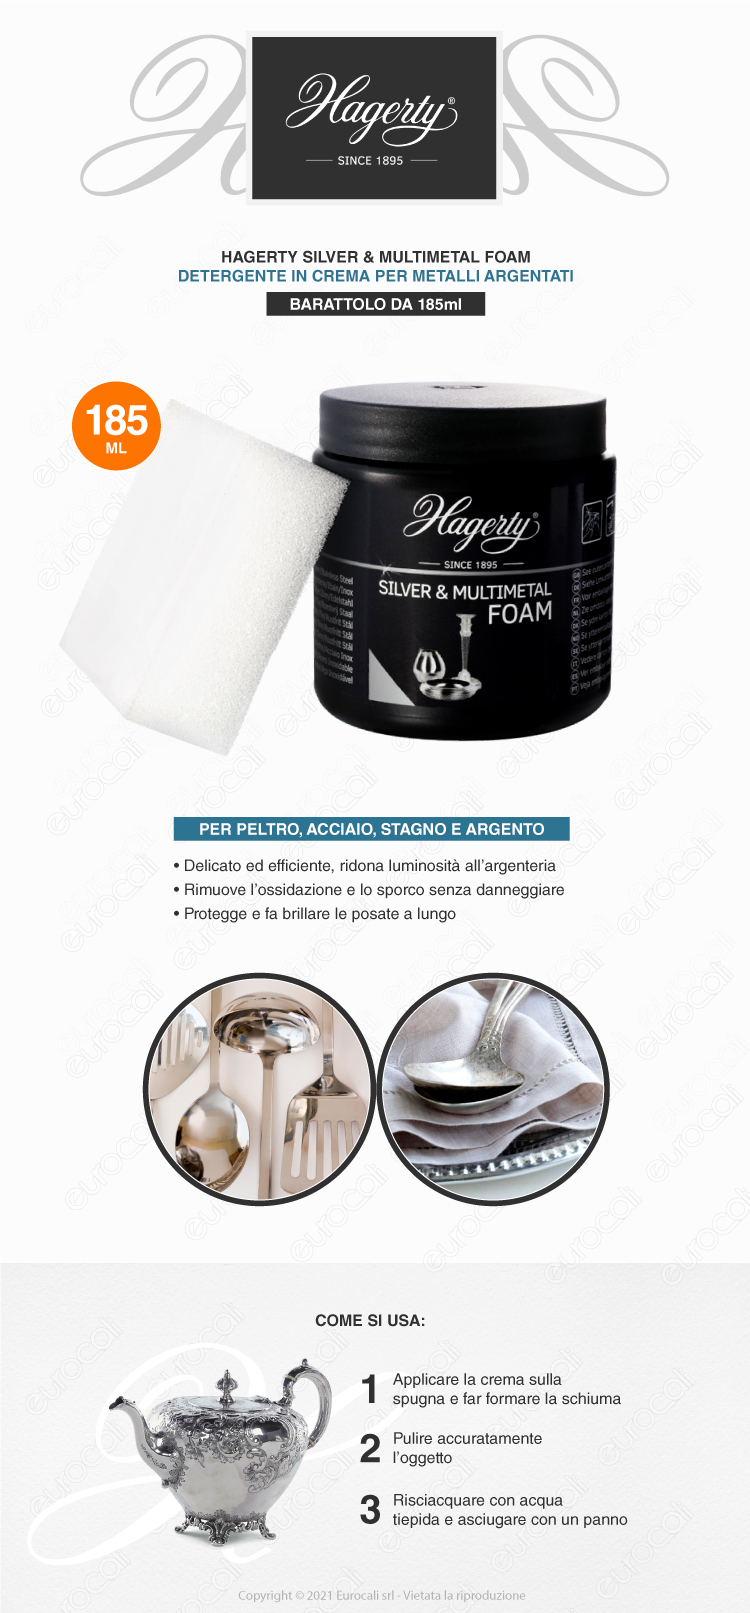 hagerty silver multimetal foam crema argenteria metalli spugna 250ml